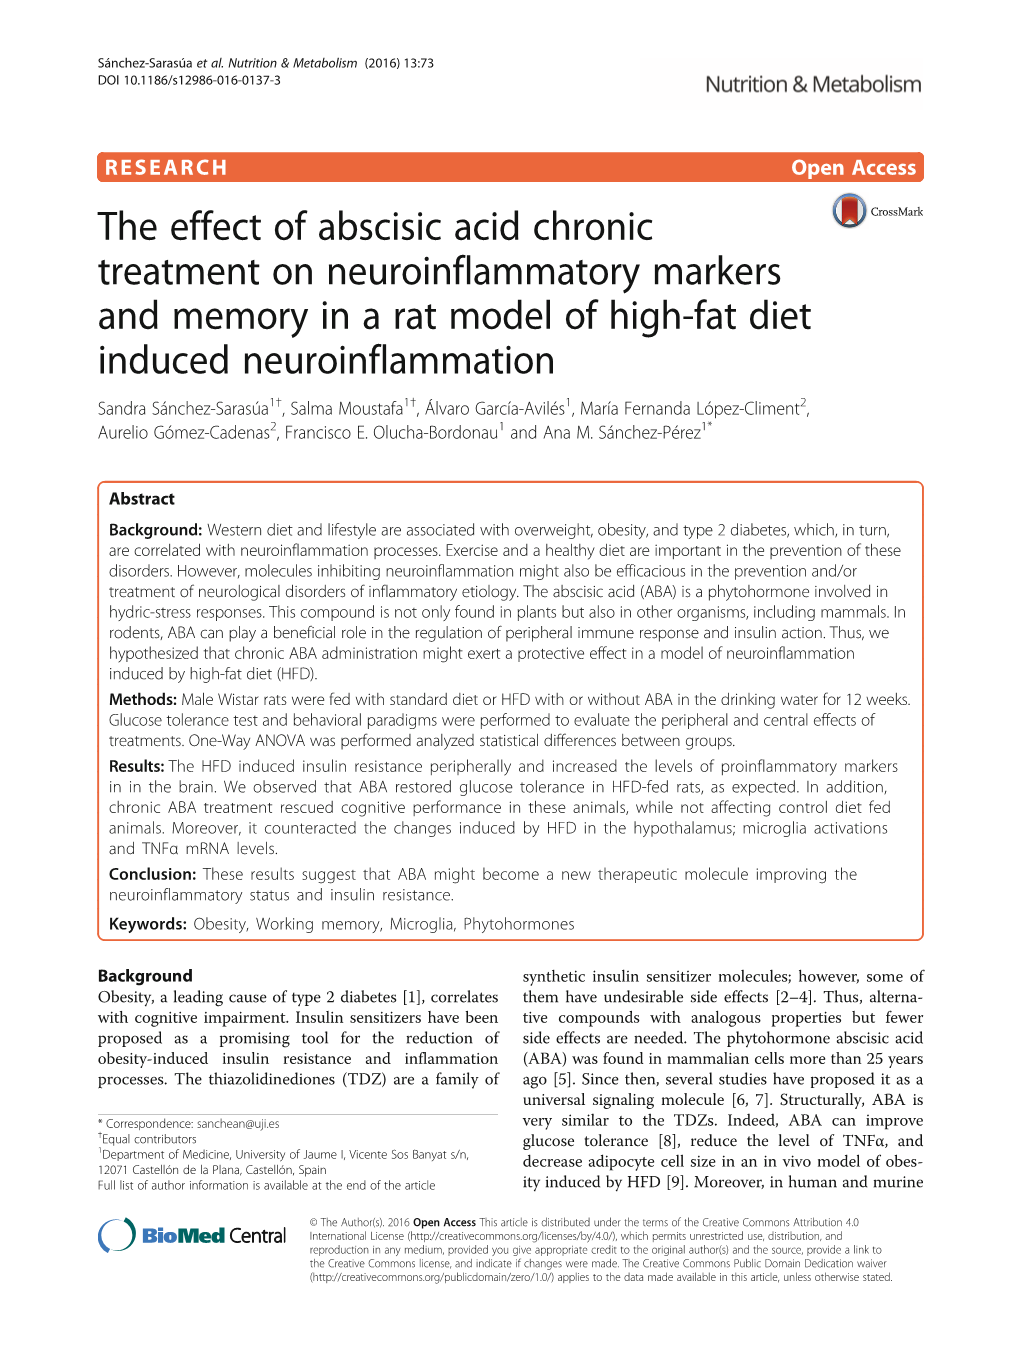 The Effect of Abscisic Acid Chronic Treatment on Neuroinflammatory